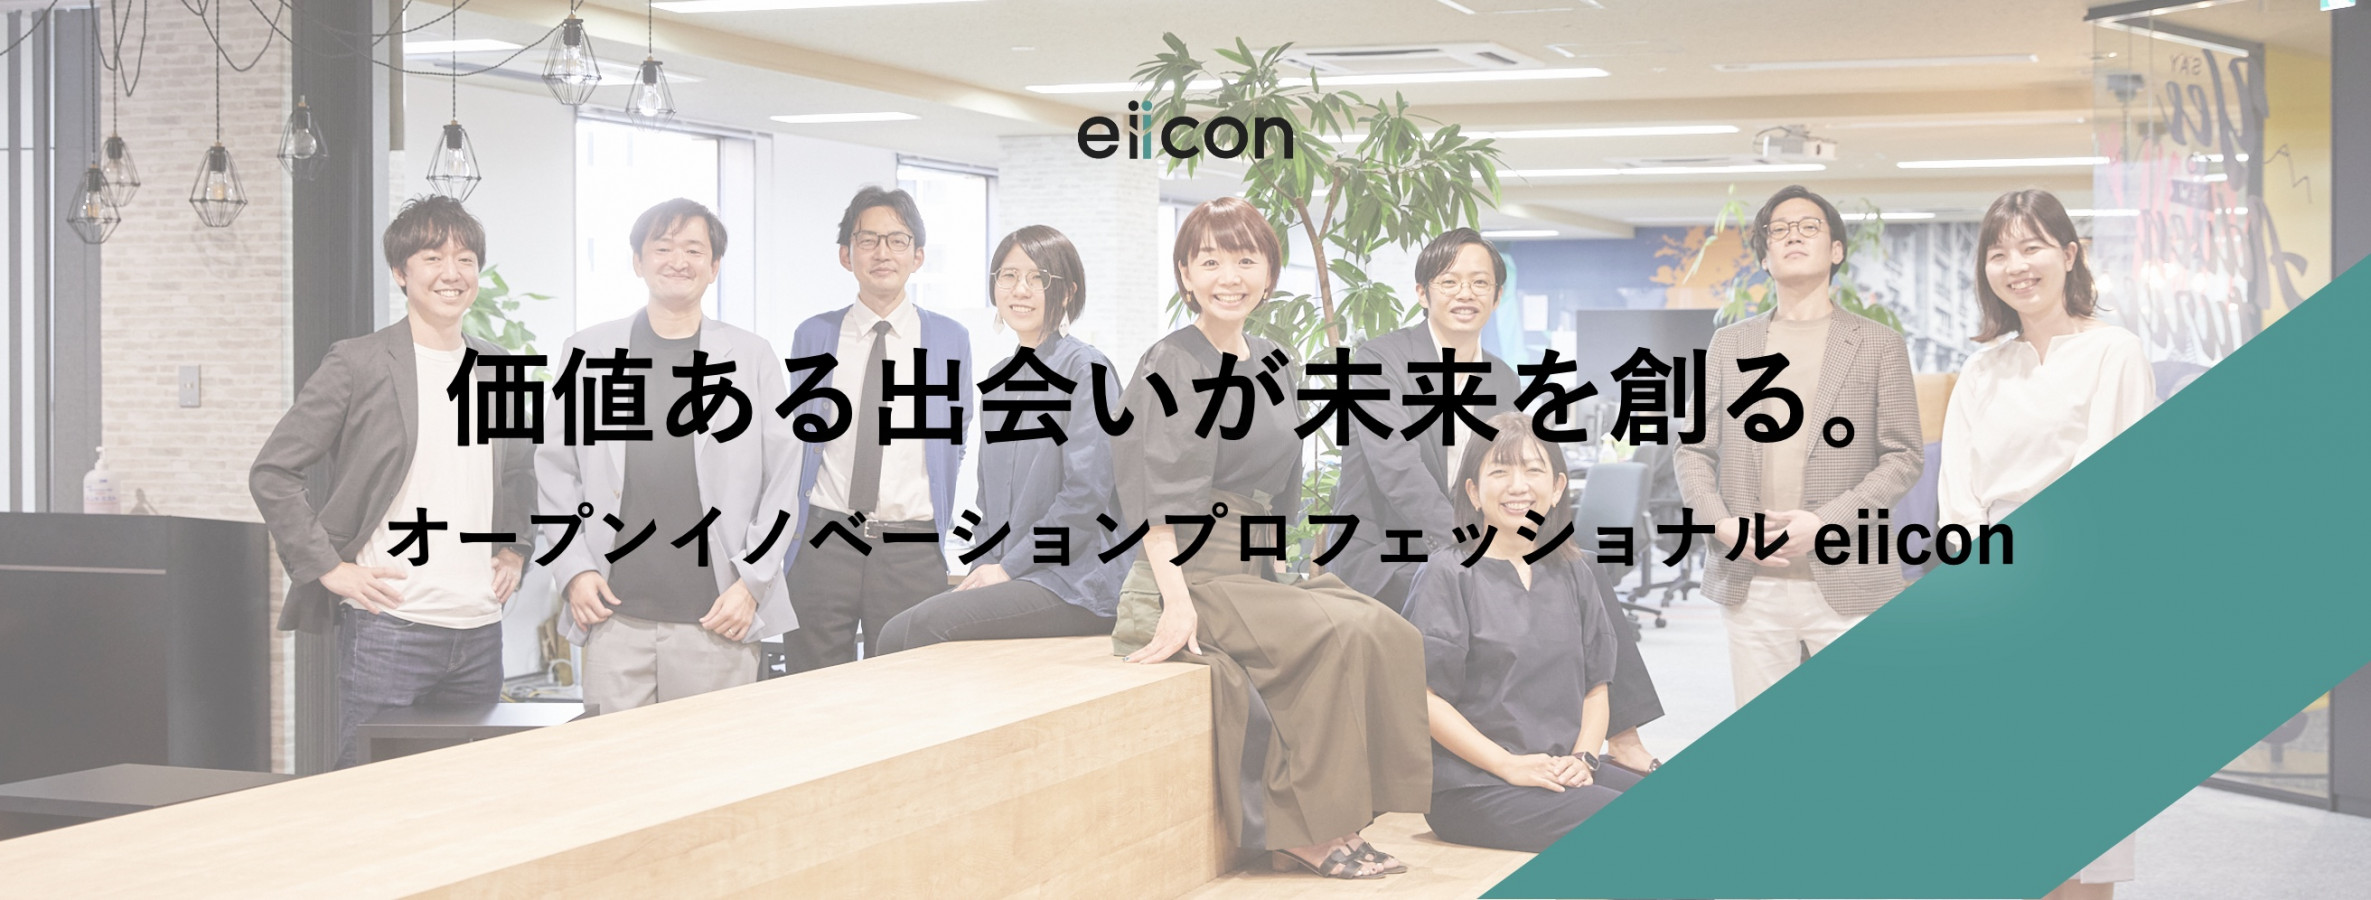 eiicon company導入事例